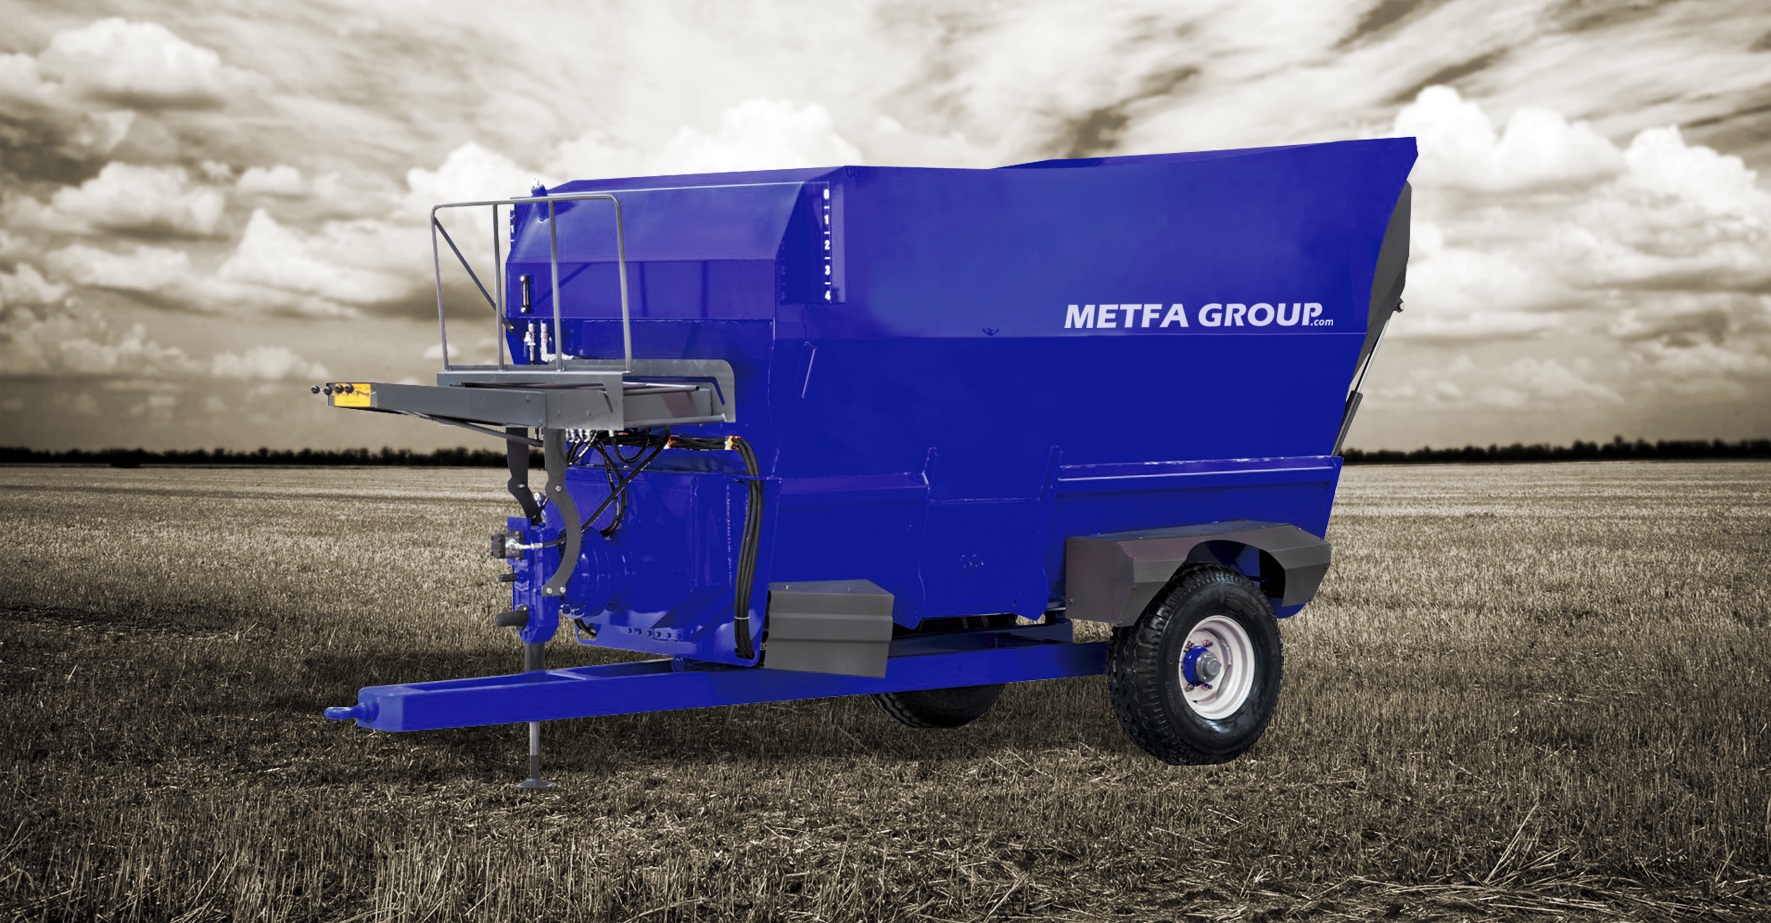 Metfa Group Feed Mixer Wagon